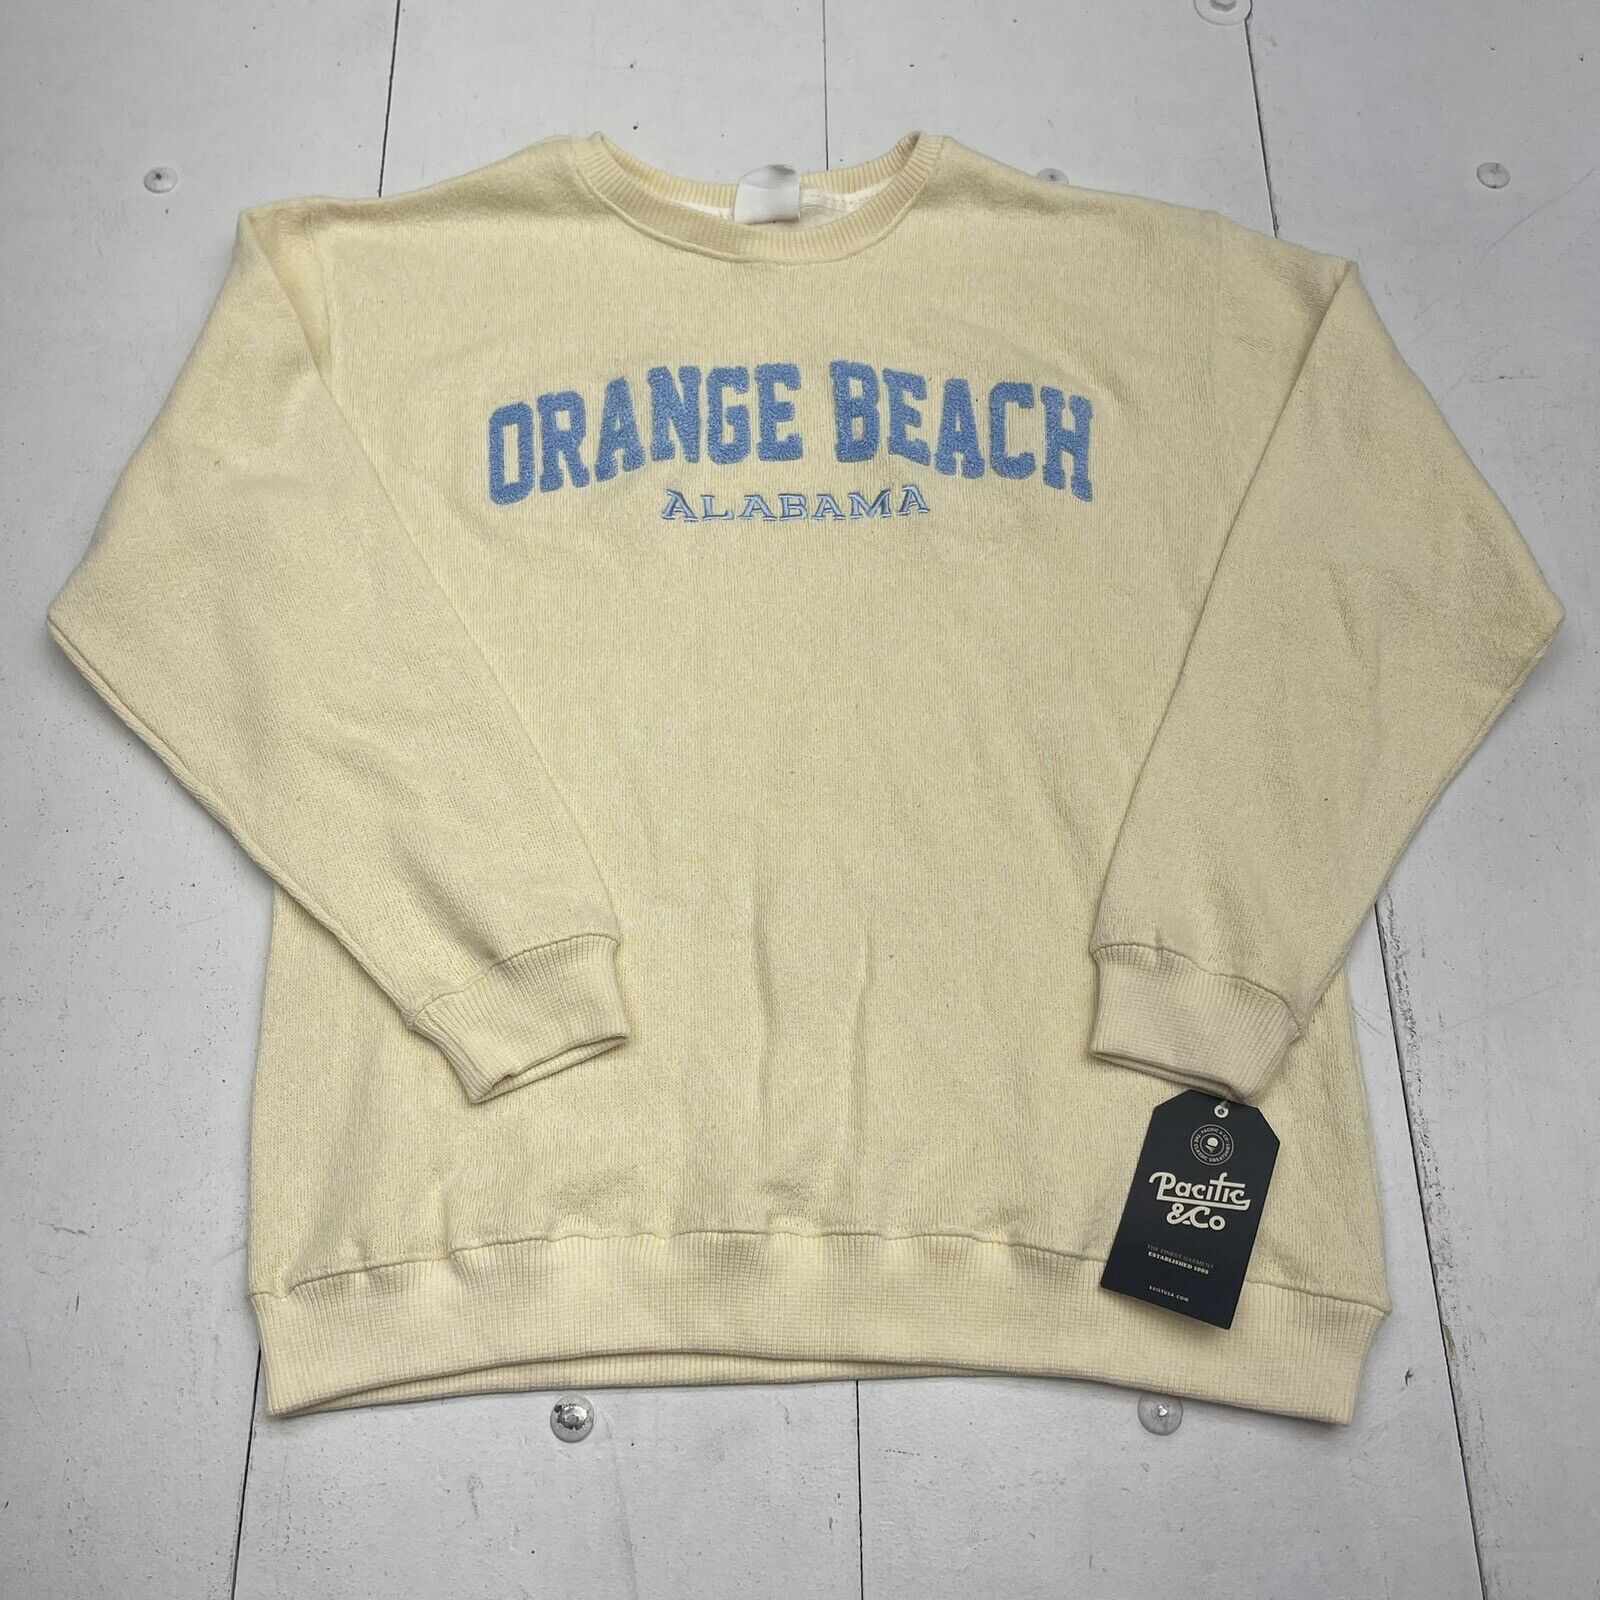 Pacific & Co Soft Yellow Orange Beach Alabama Sweatshirt Women’s Size XL New